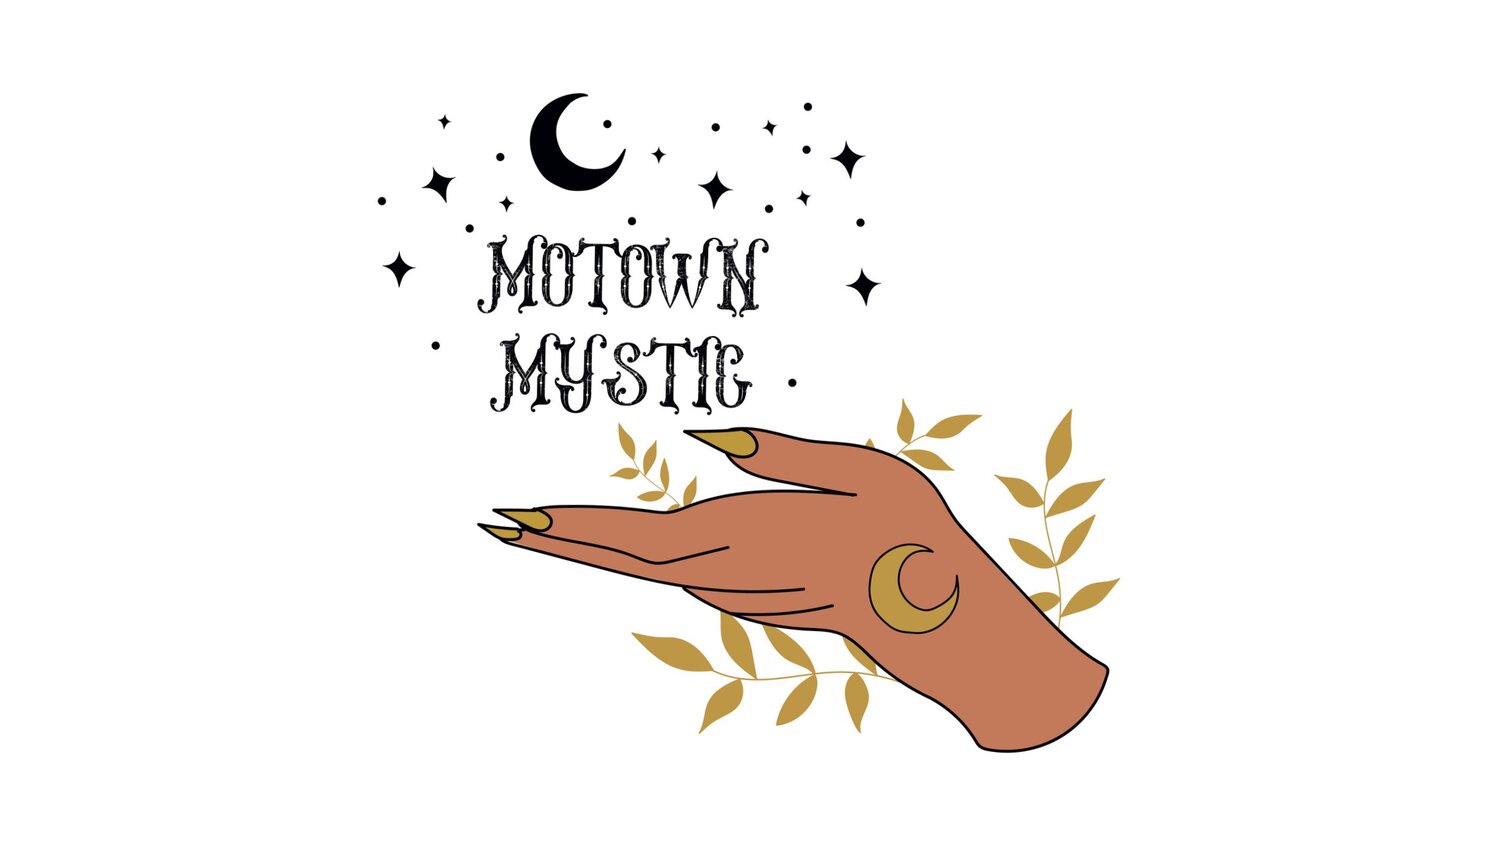 Motown Mystic